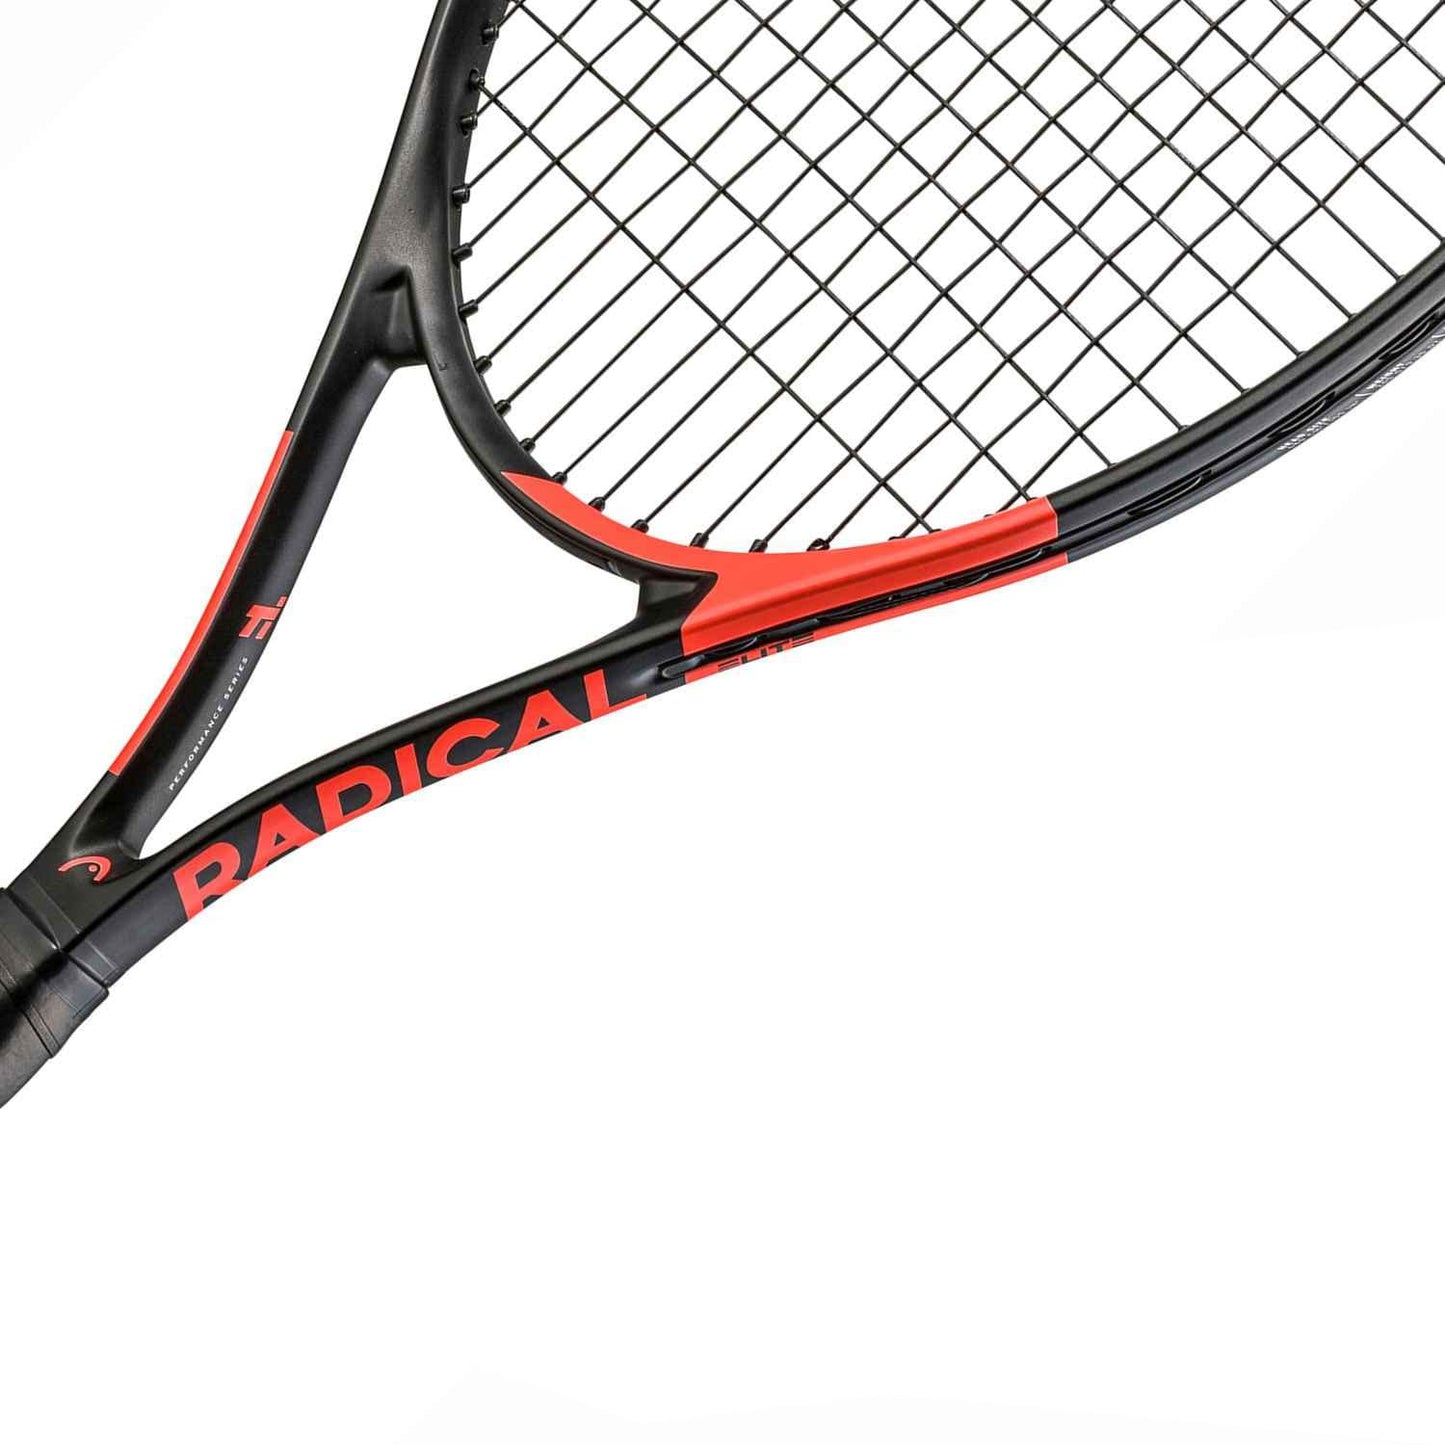 Head Ti. Radical Elite Str Tennis Racquet - Best Price online Prokicksports.com